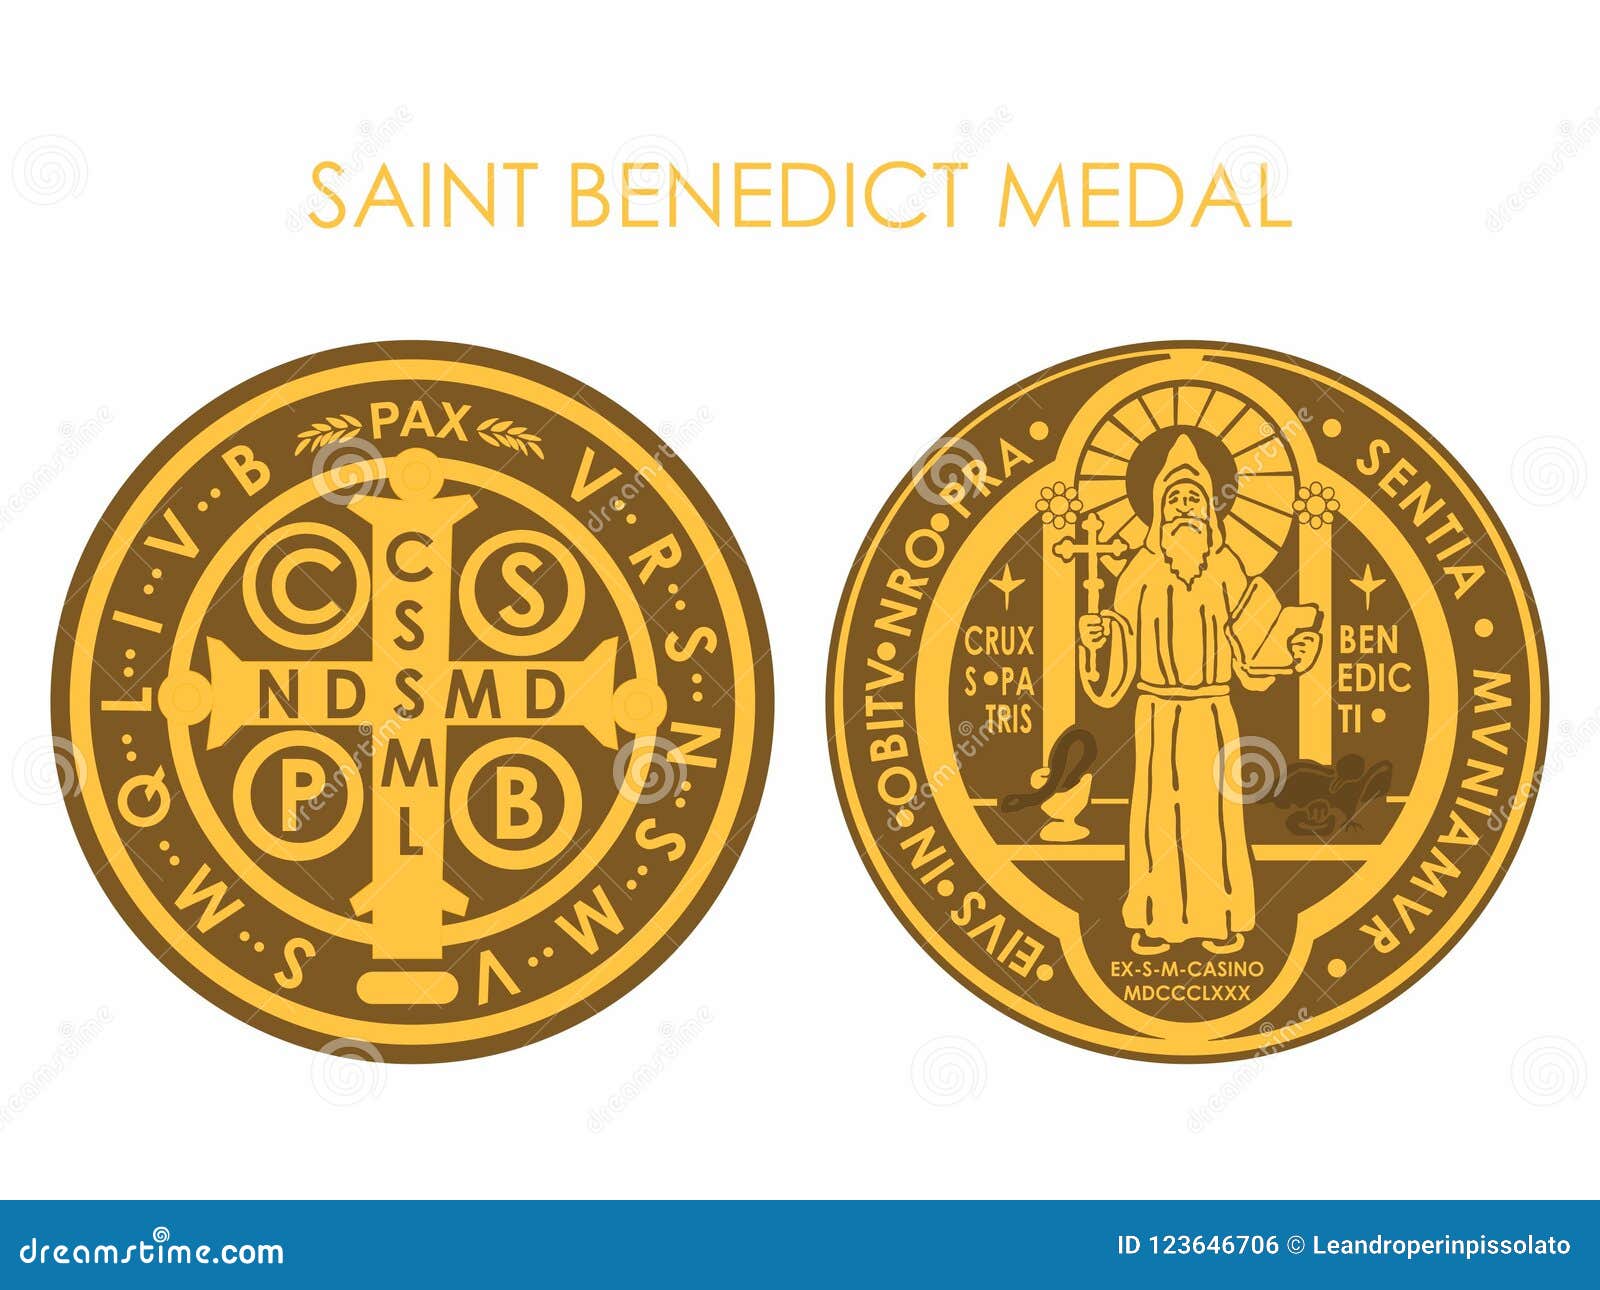 saint benedict medal gold